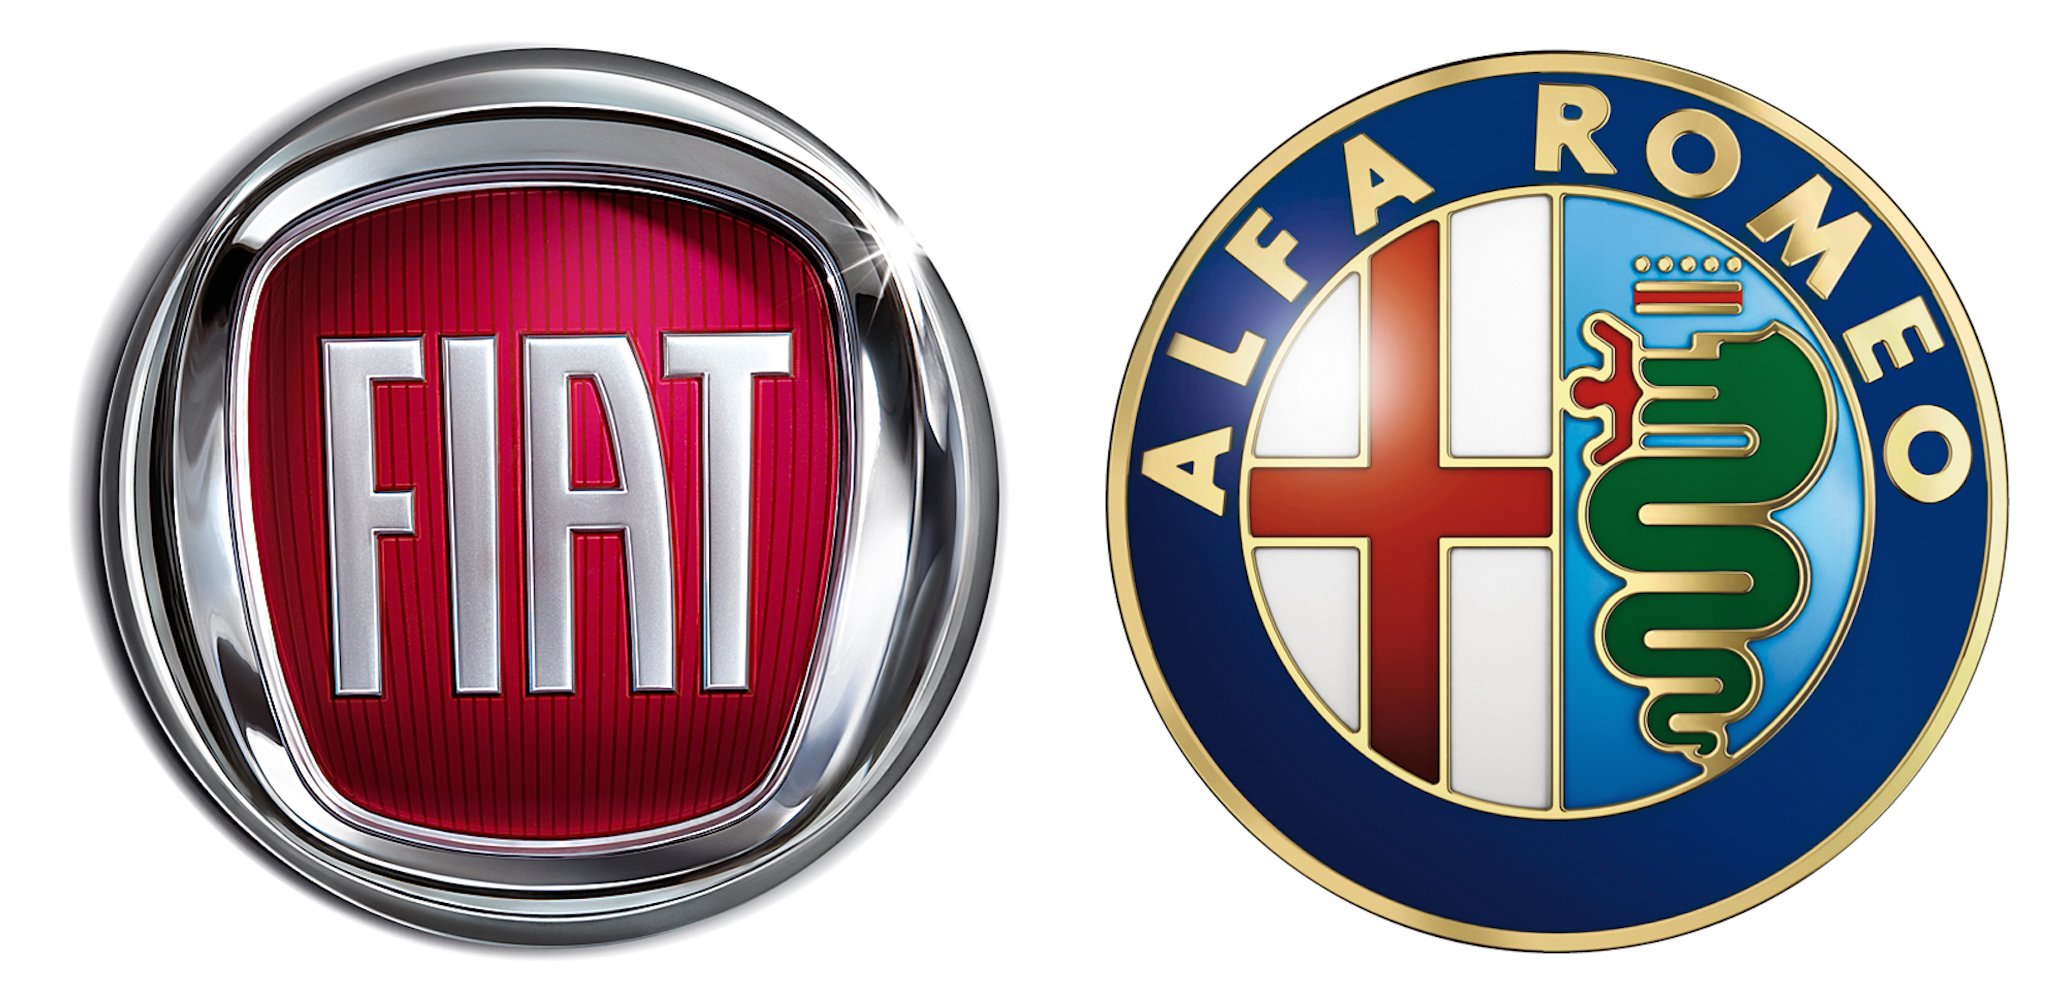 Fiat Engineering Logo photo - 1